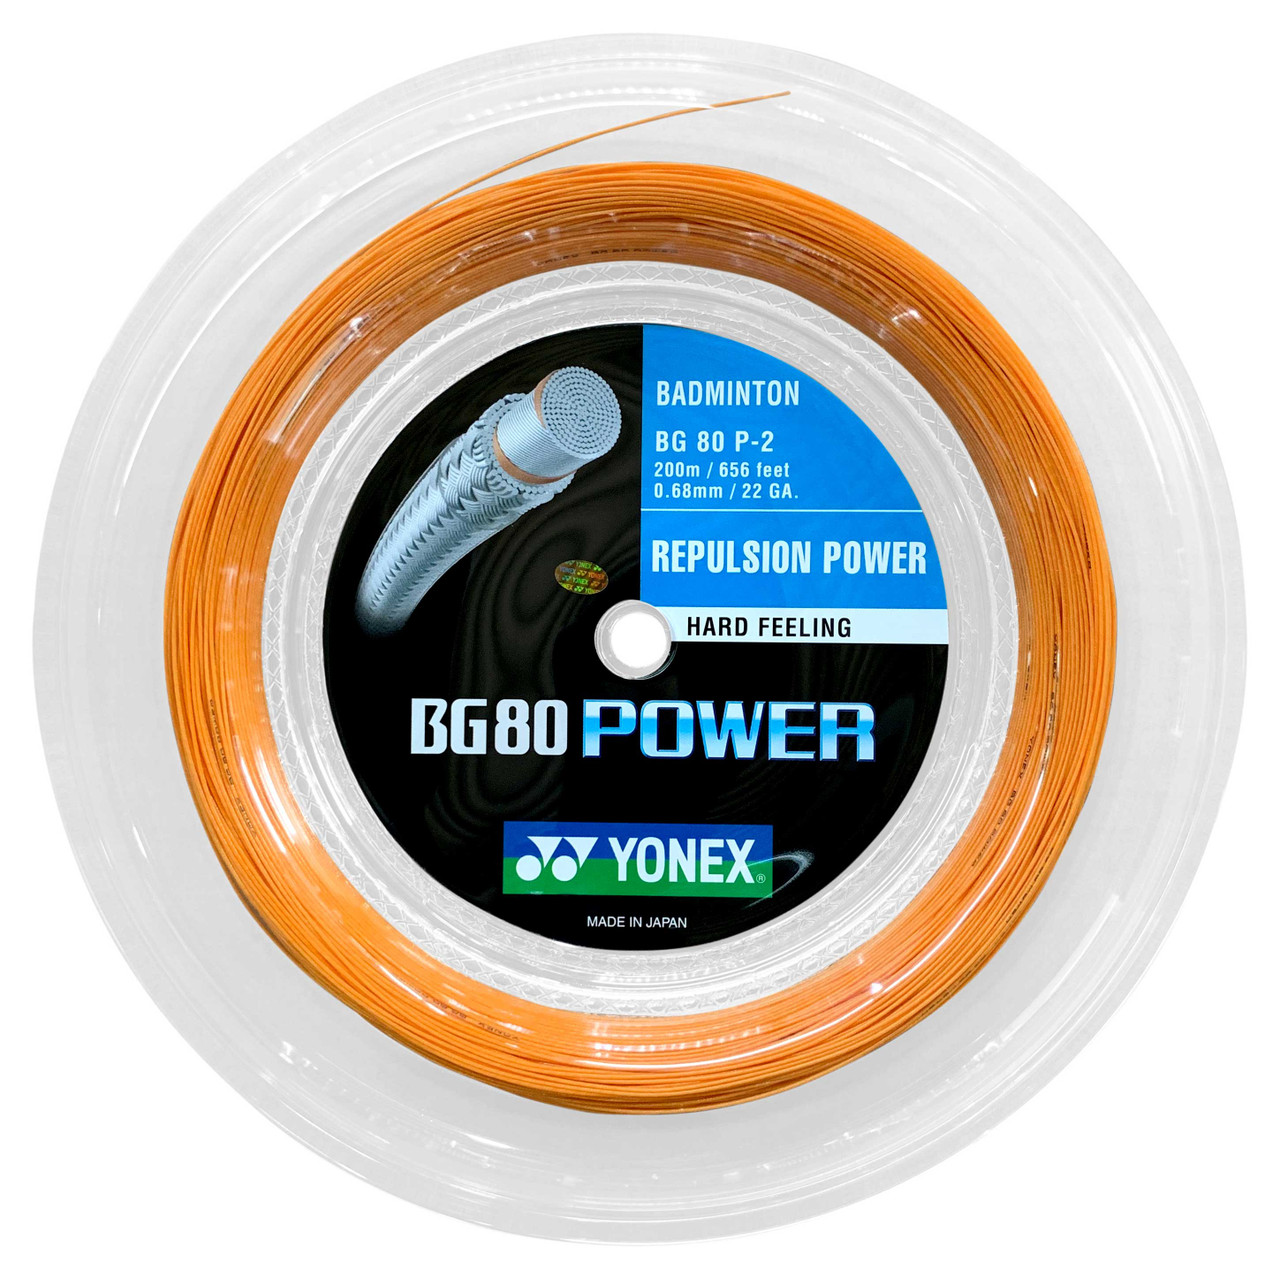 Yonex BG80 Power 0.68mm Badminton 200M Reel - W & D Strings